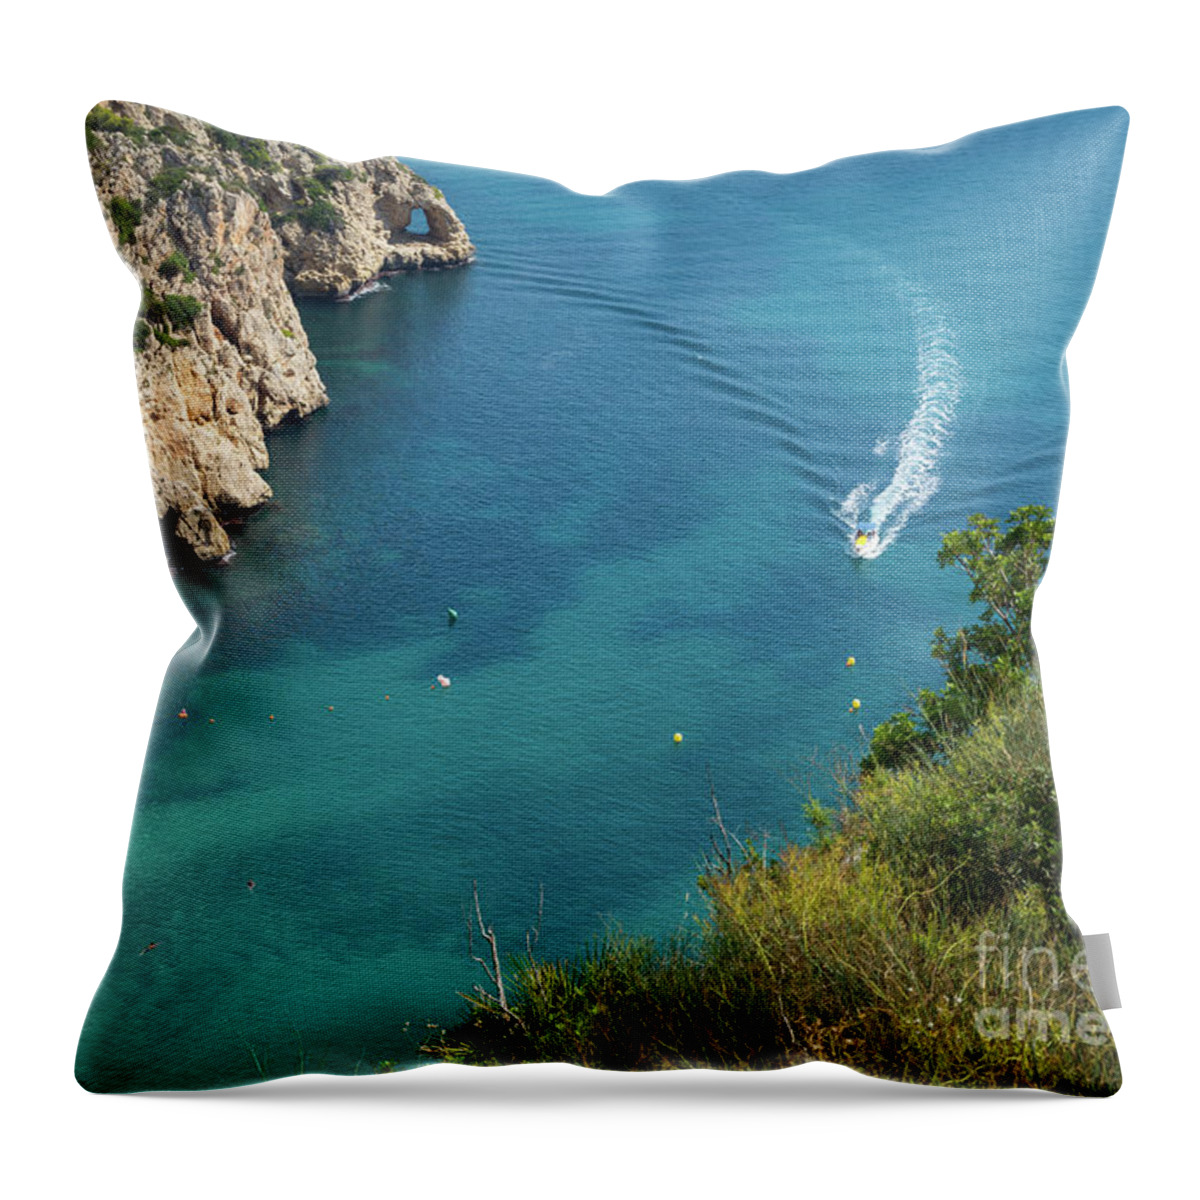 Mediterranean Sea Throw Pillow featuring the photograph Cala de la Granadella, boat trip on the Mediterranean Sea by Adriana Mueller